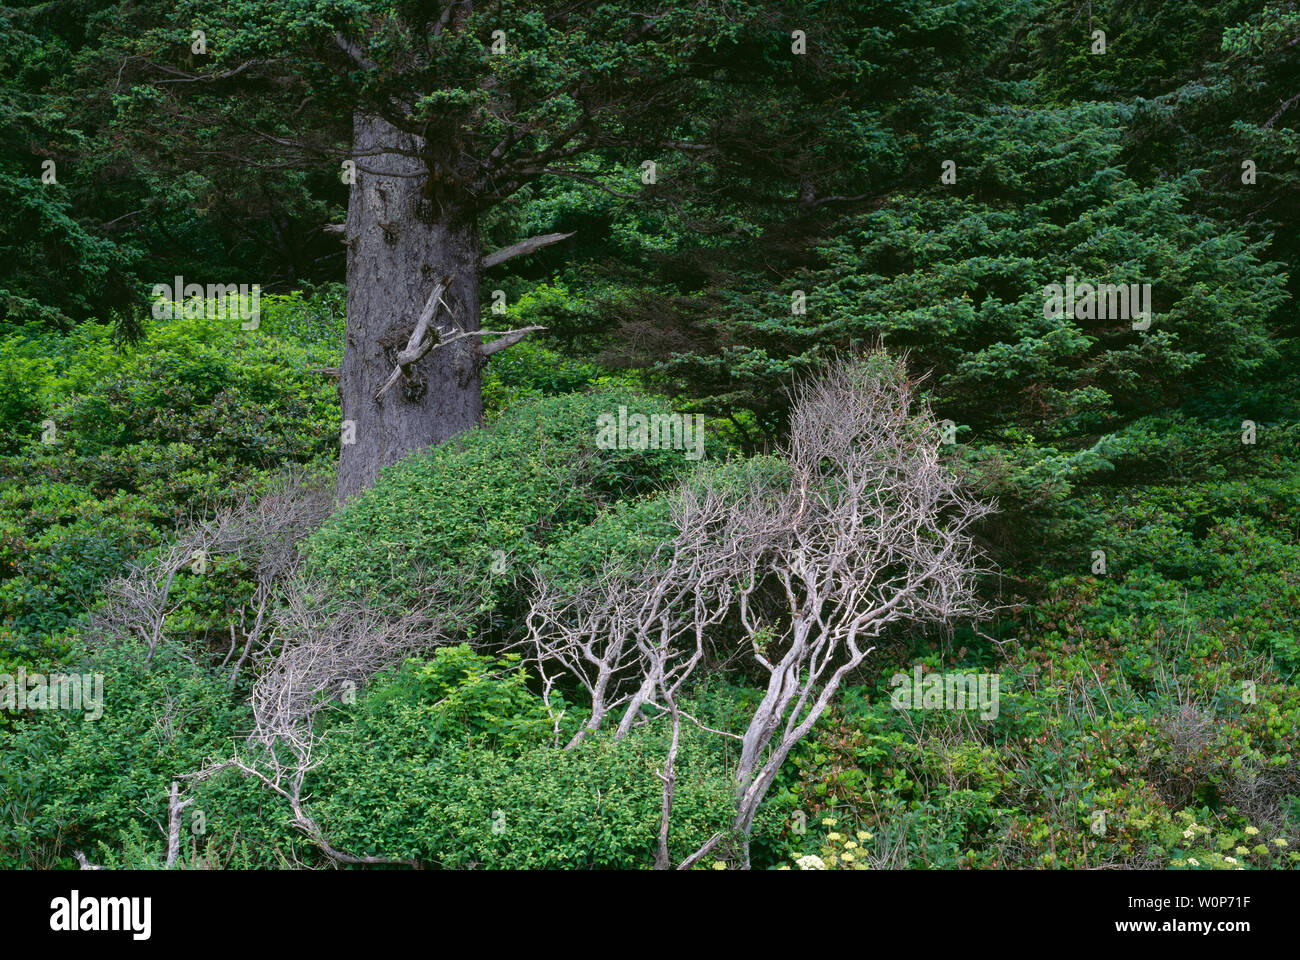 USA, Washington, Olympic National Park, Seaside coastal forest of Sitka spruce grows along shoreline at Rialto Beach. Stock Photo